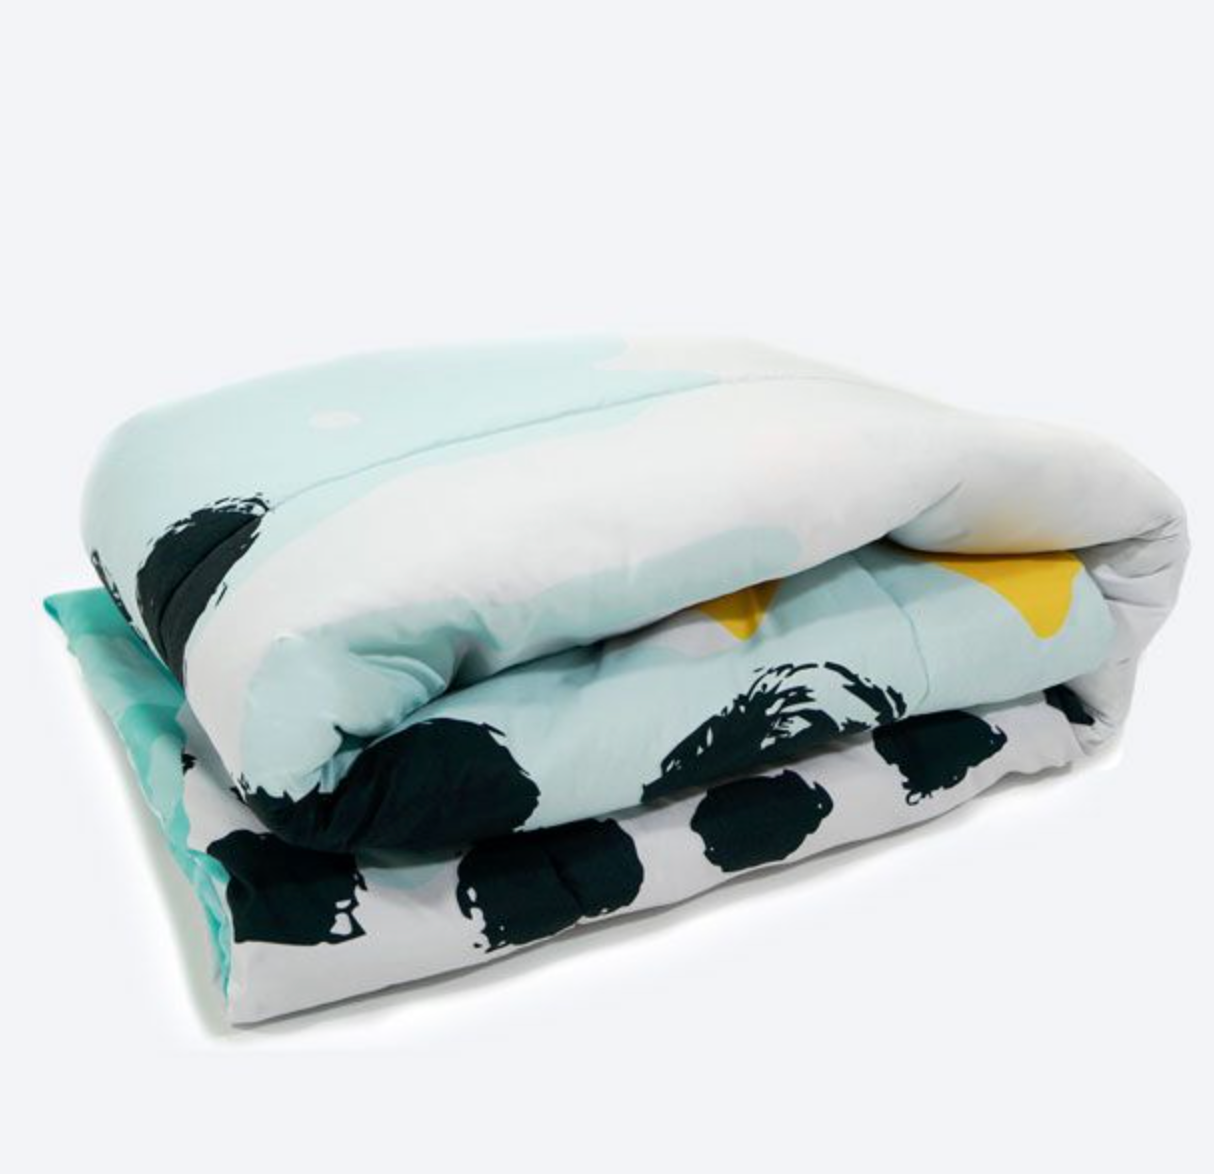 Comforter Rainbow Unicorn Color Custom Bedding Set for Kids Teens Adult Personalized Premium Bed Set